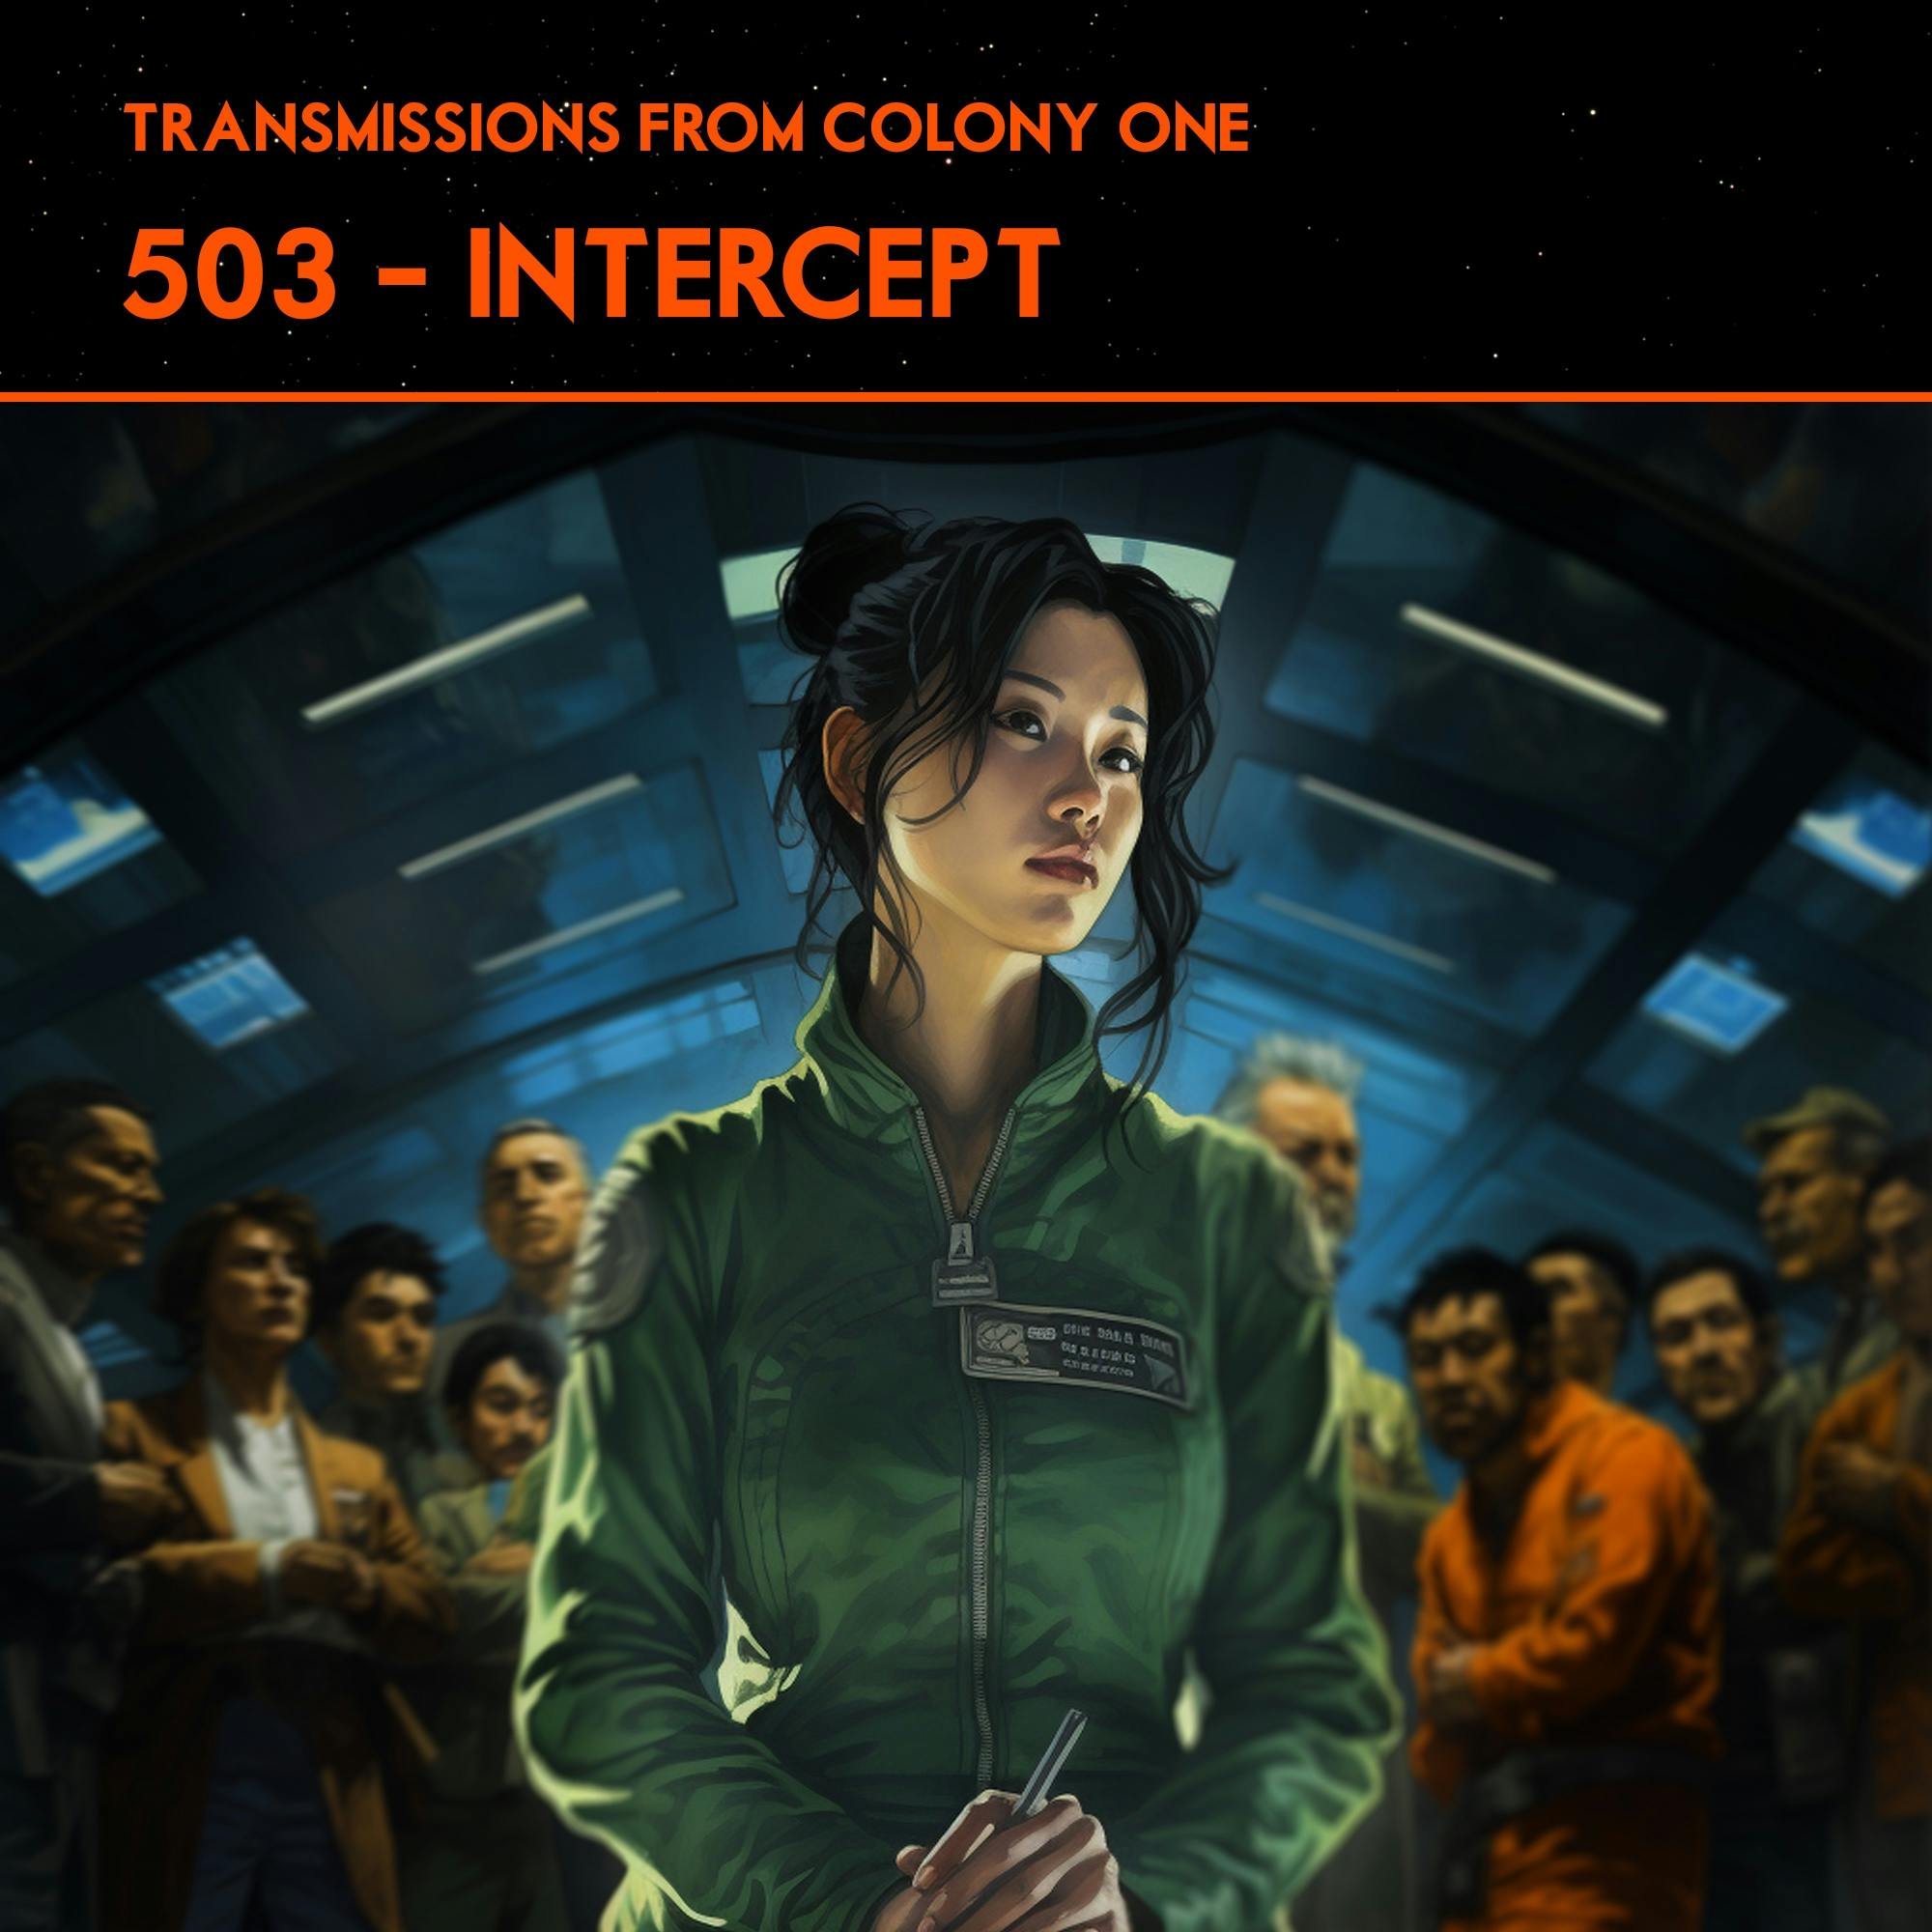 503 - Intercept